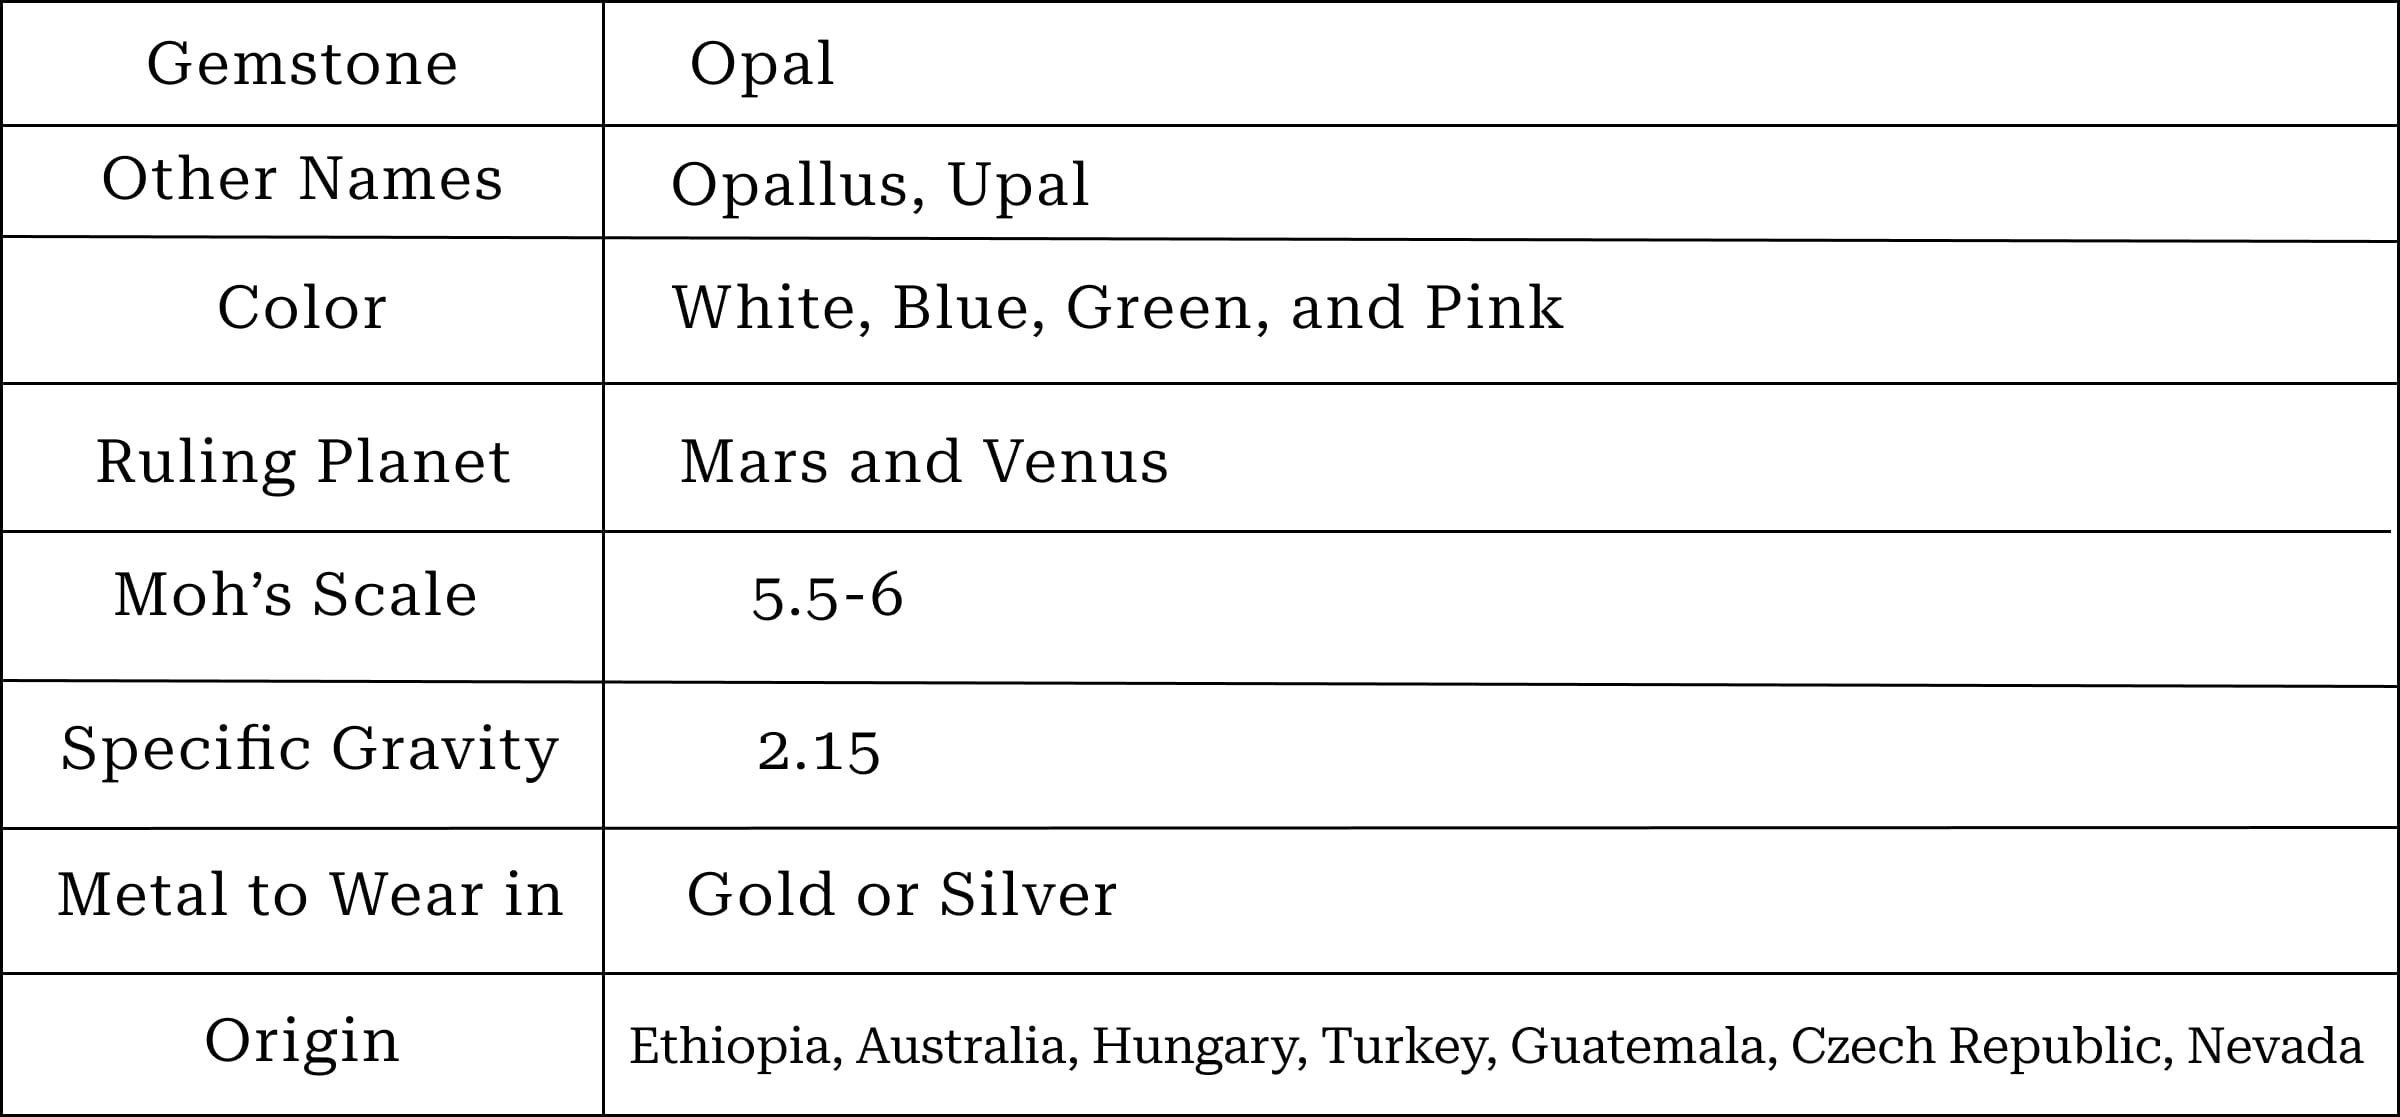 Summary of Opal